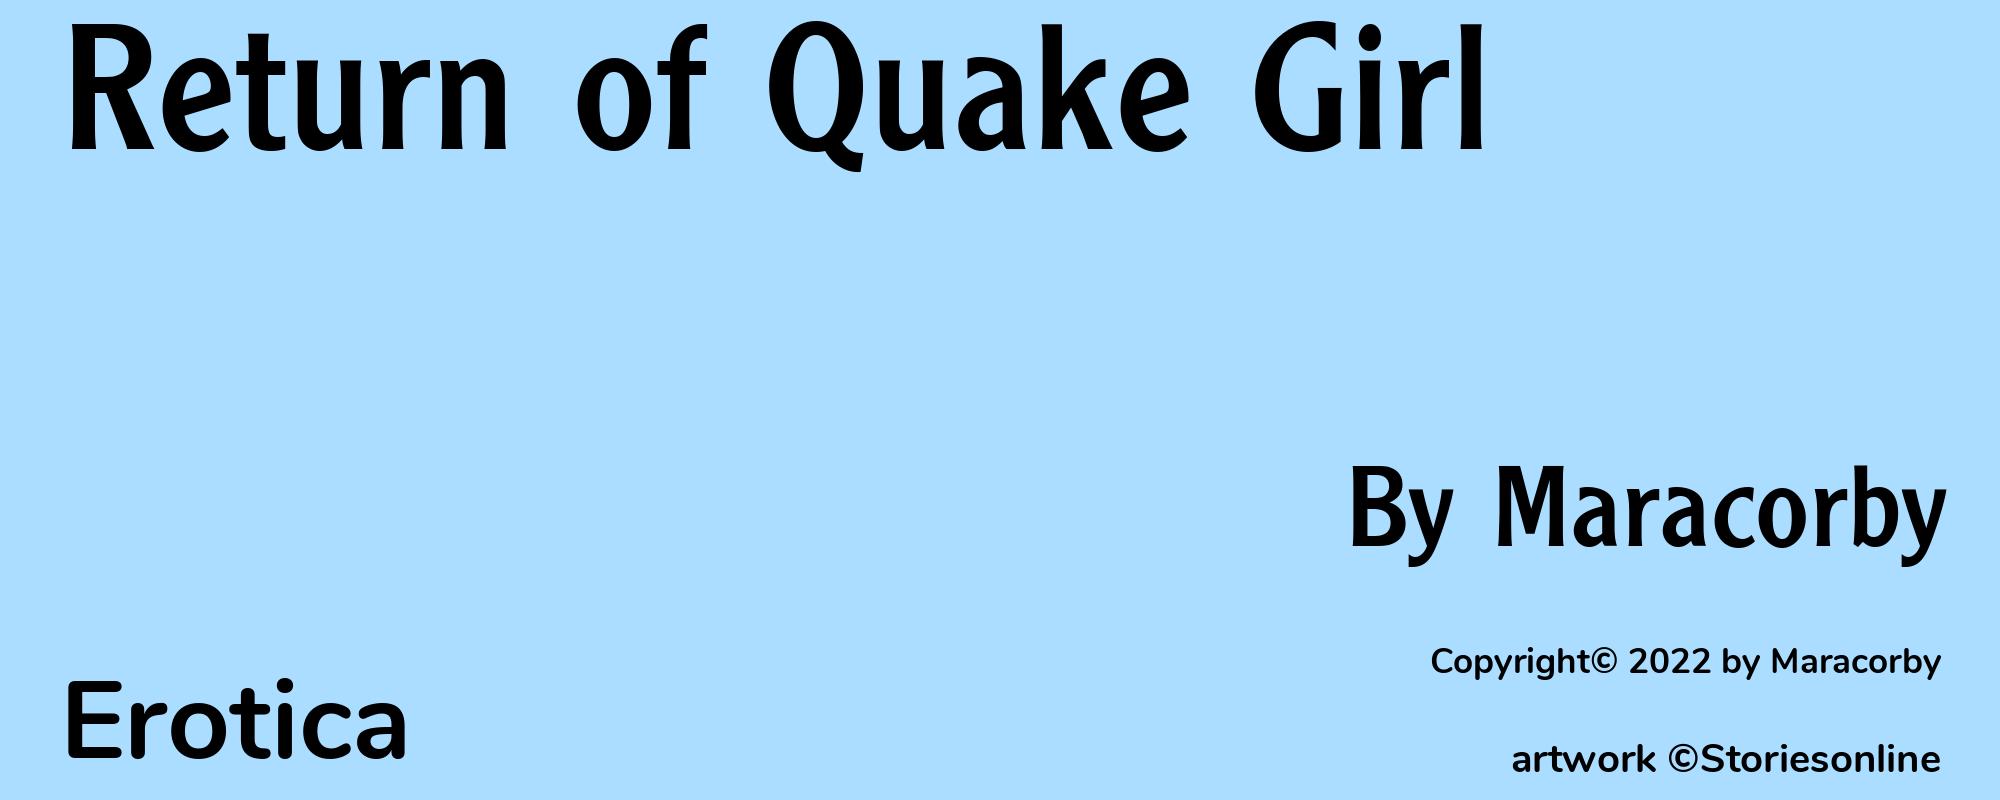 Return of Quake Girl - Cover